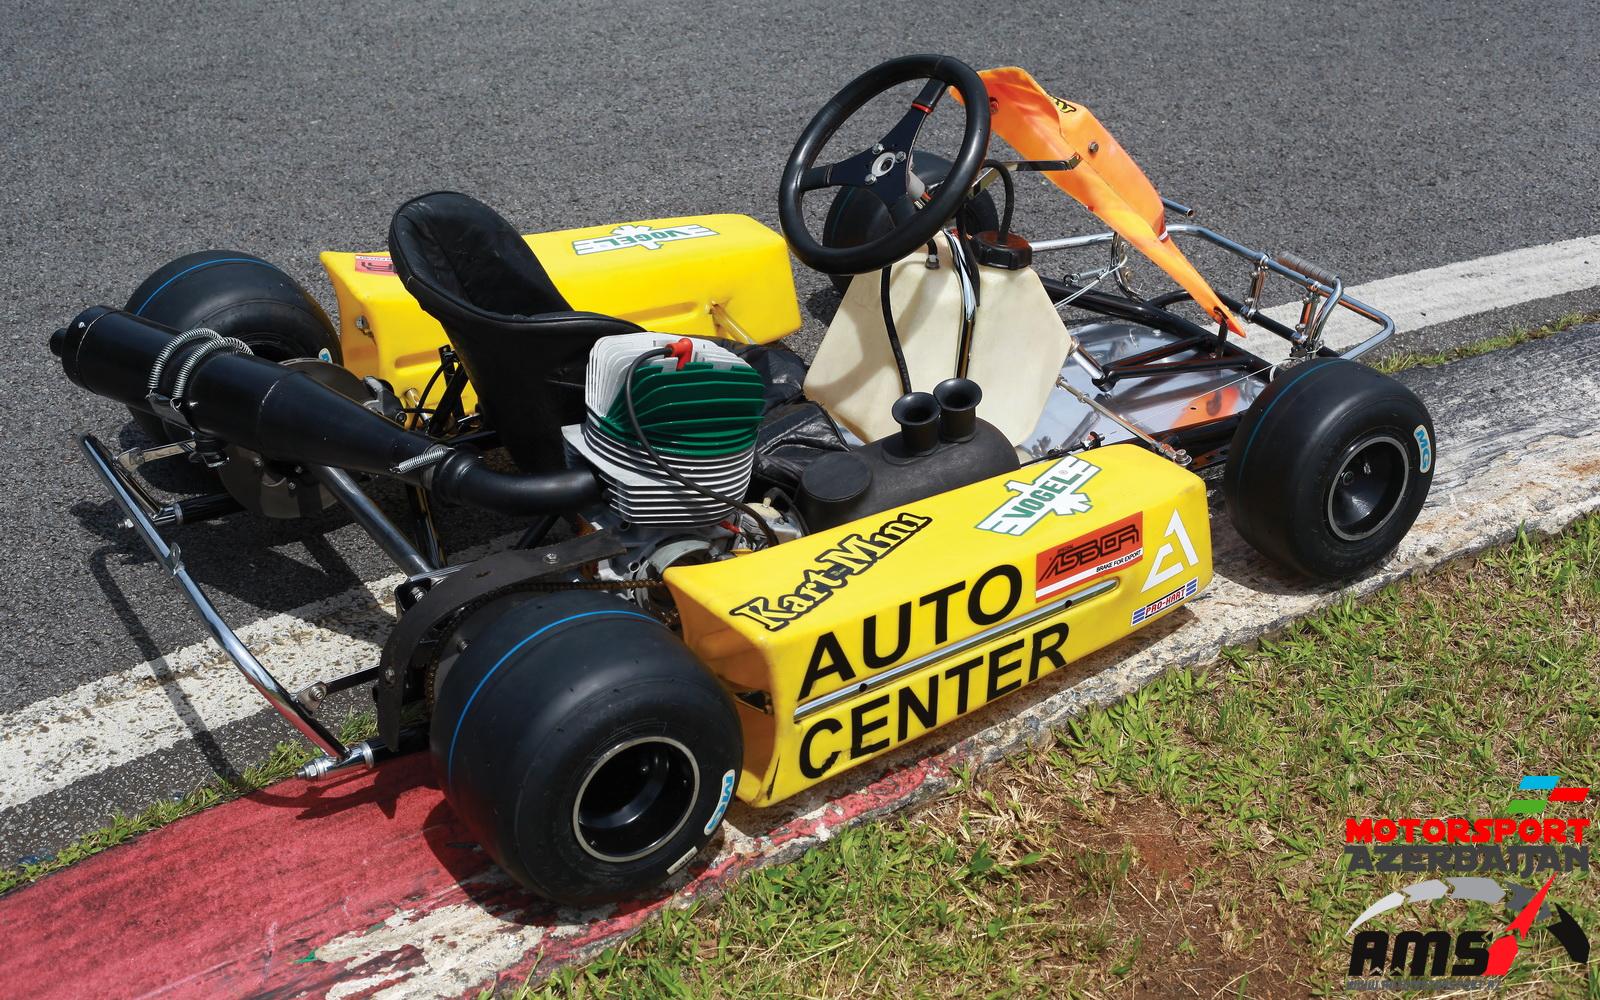 Ayrton Senna Kart